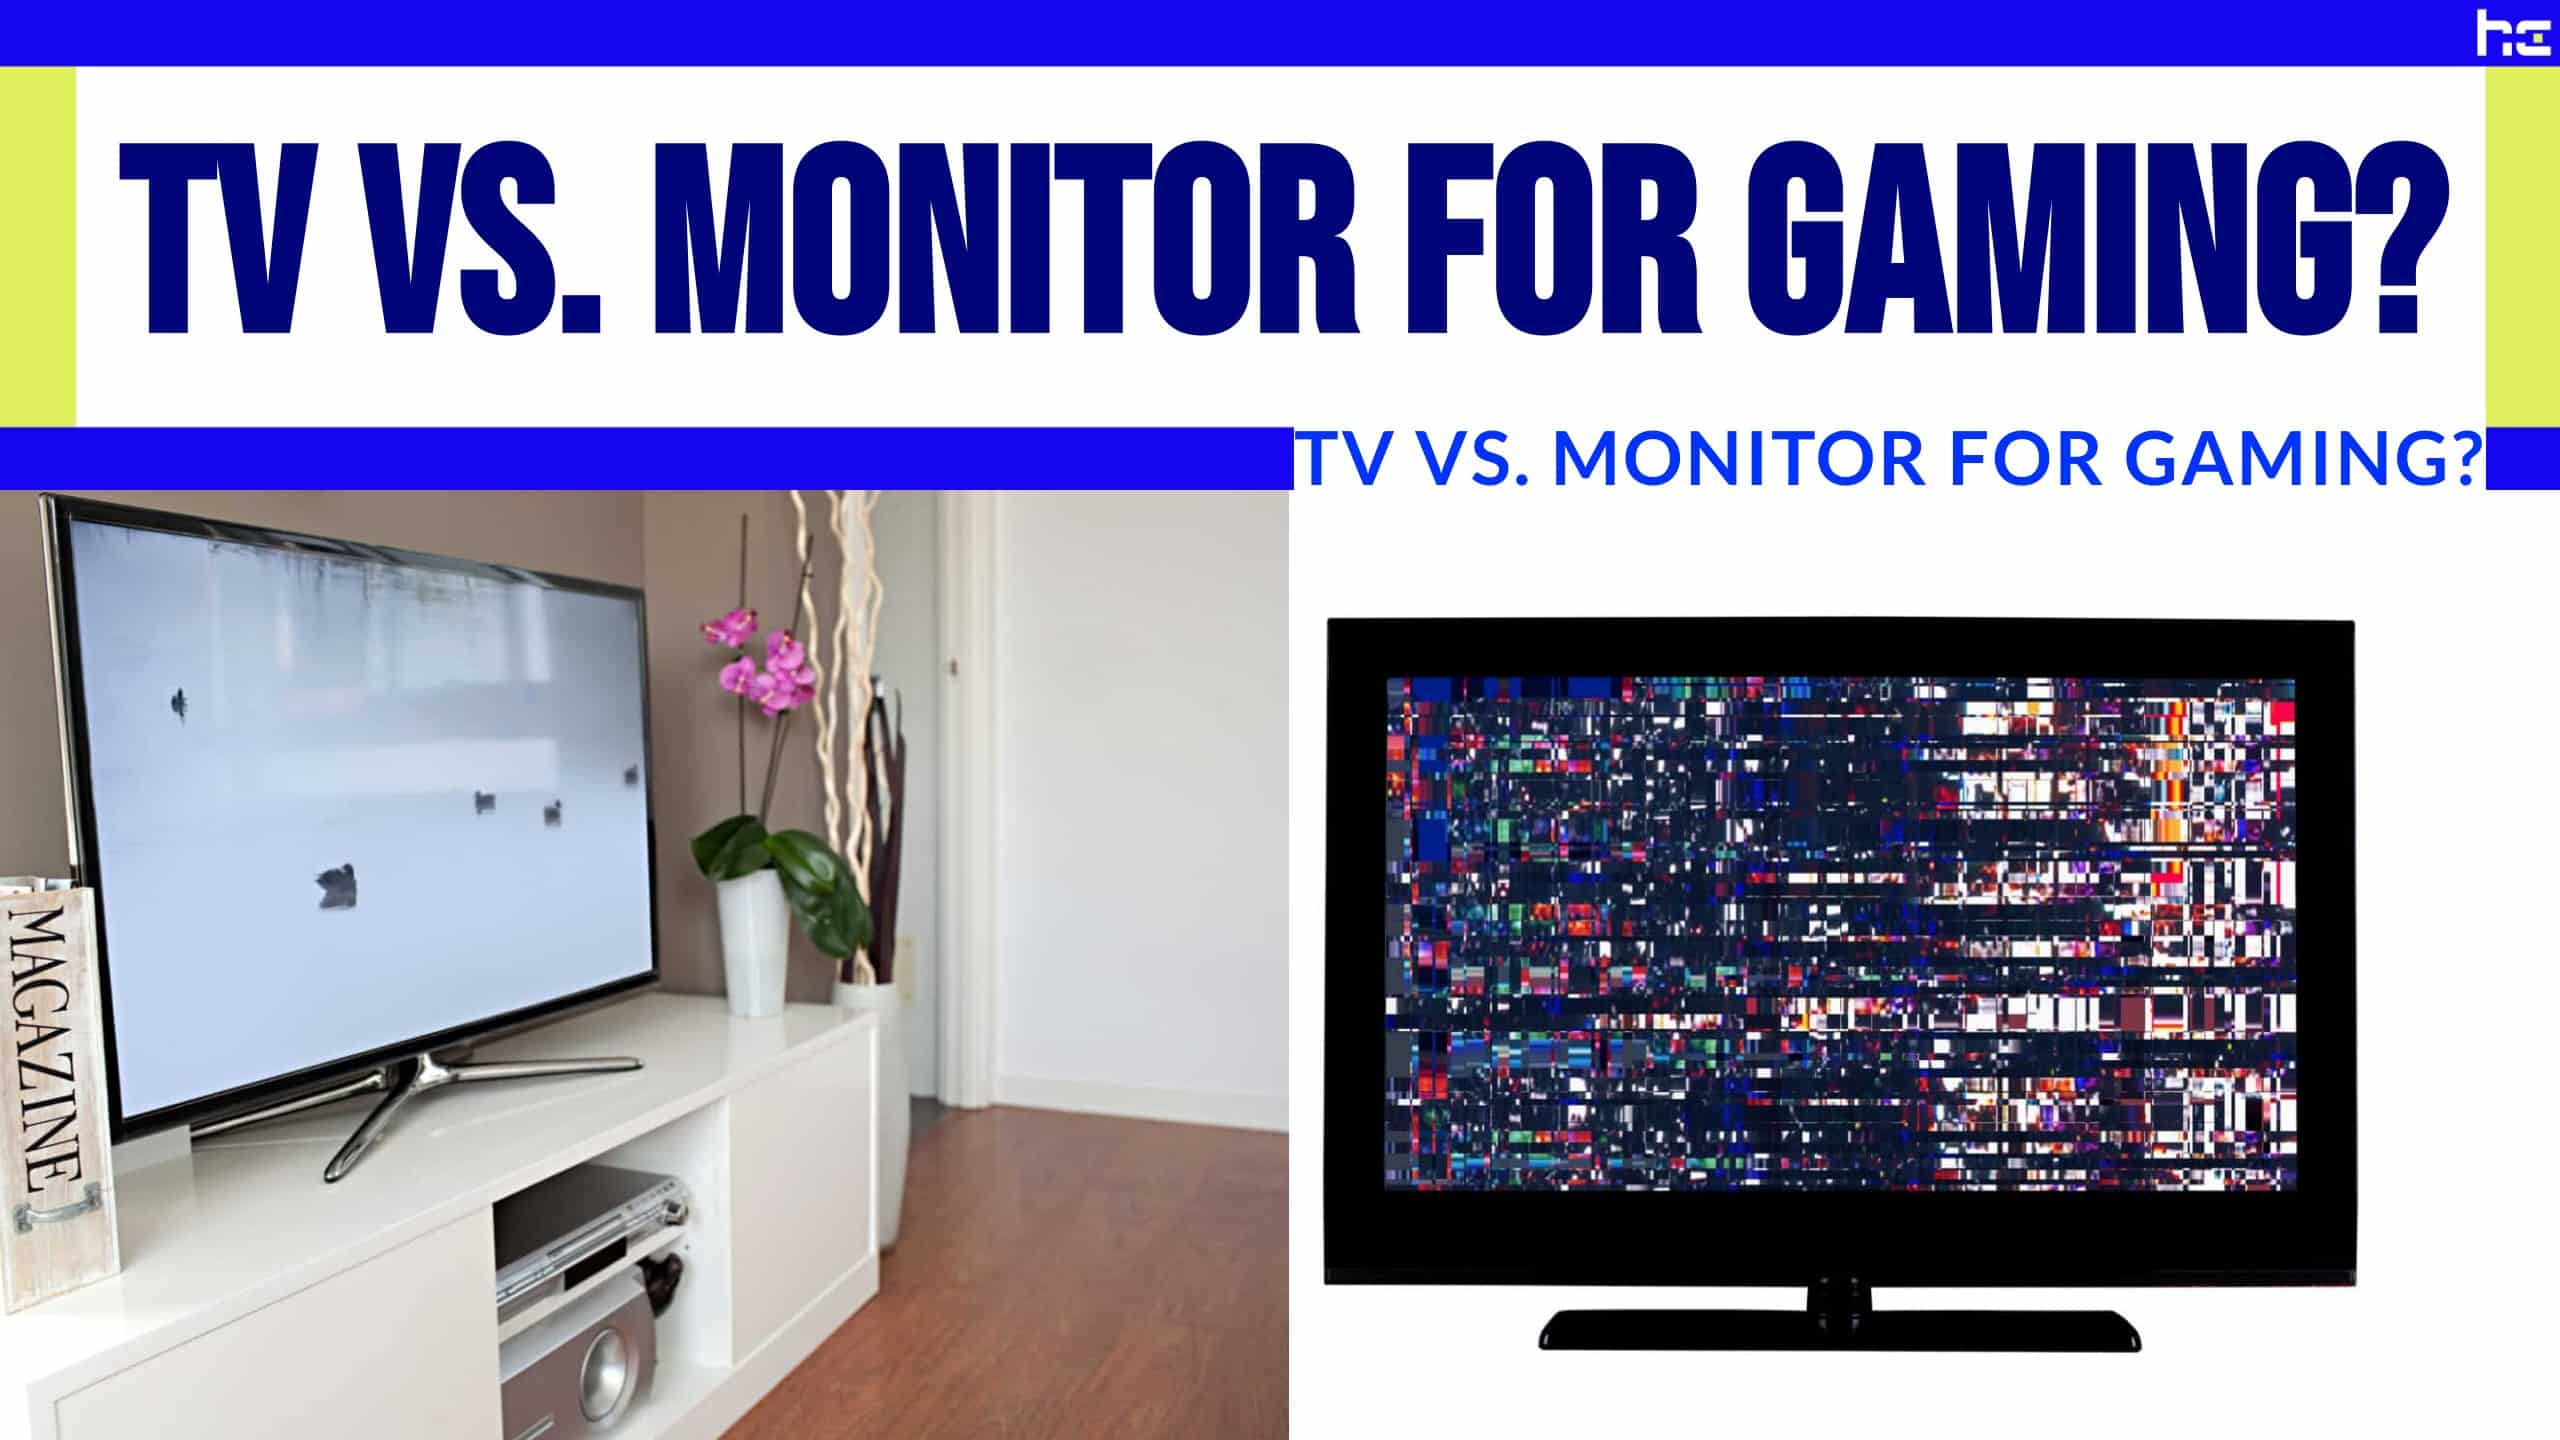 TV vs. Monitor for Gaming?